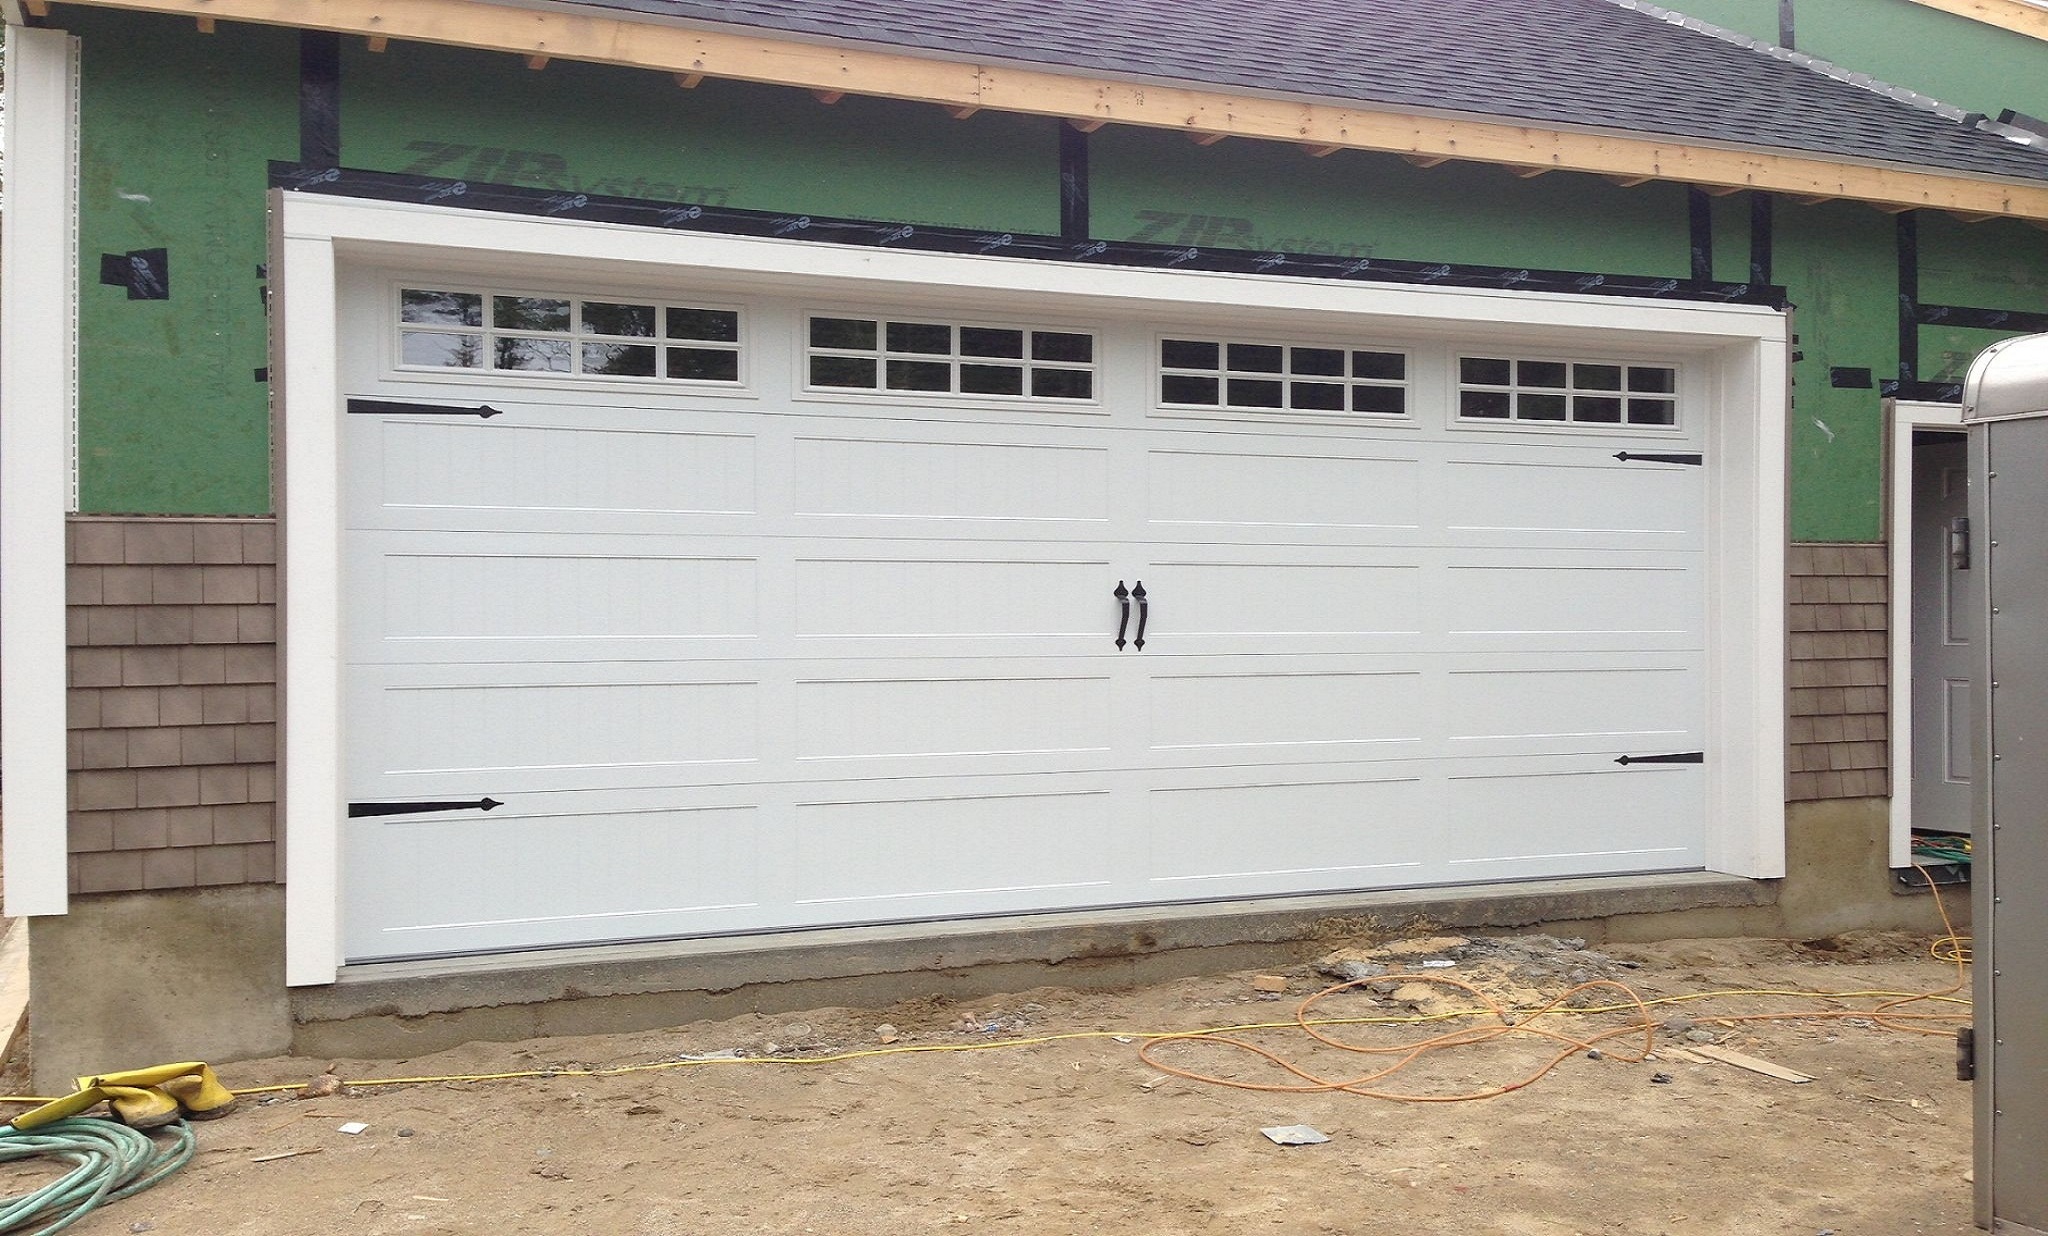 How To Enhance The Appeal Of Your Old Garage Door?